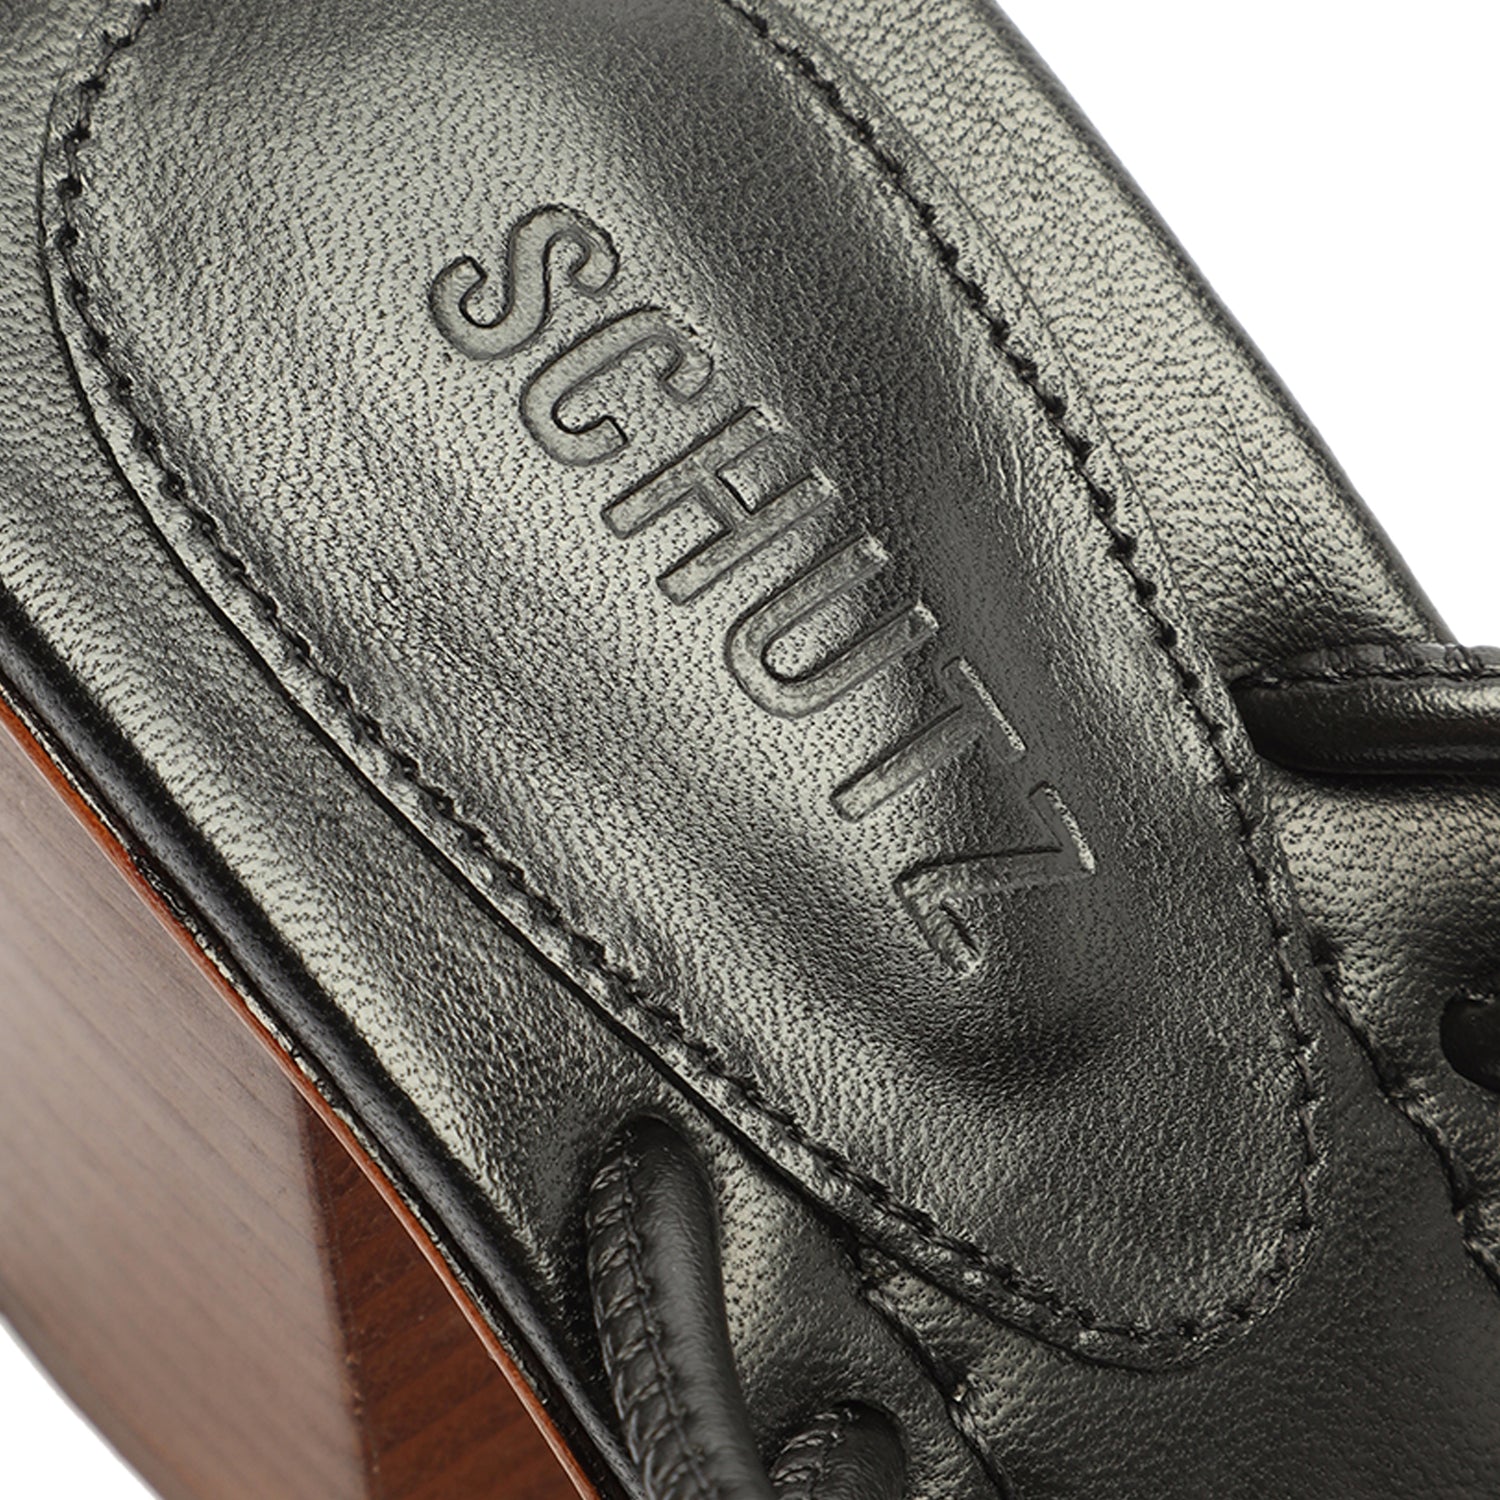 Binky Casual Leather Sandal Sandals Summer 23    - Schutz Shoes